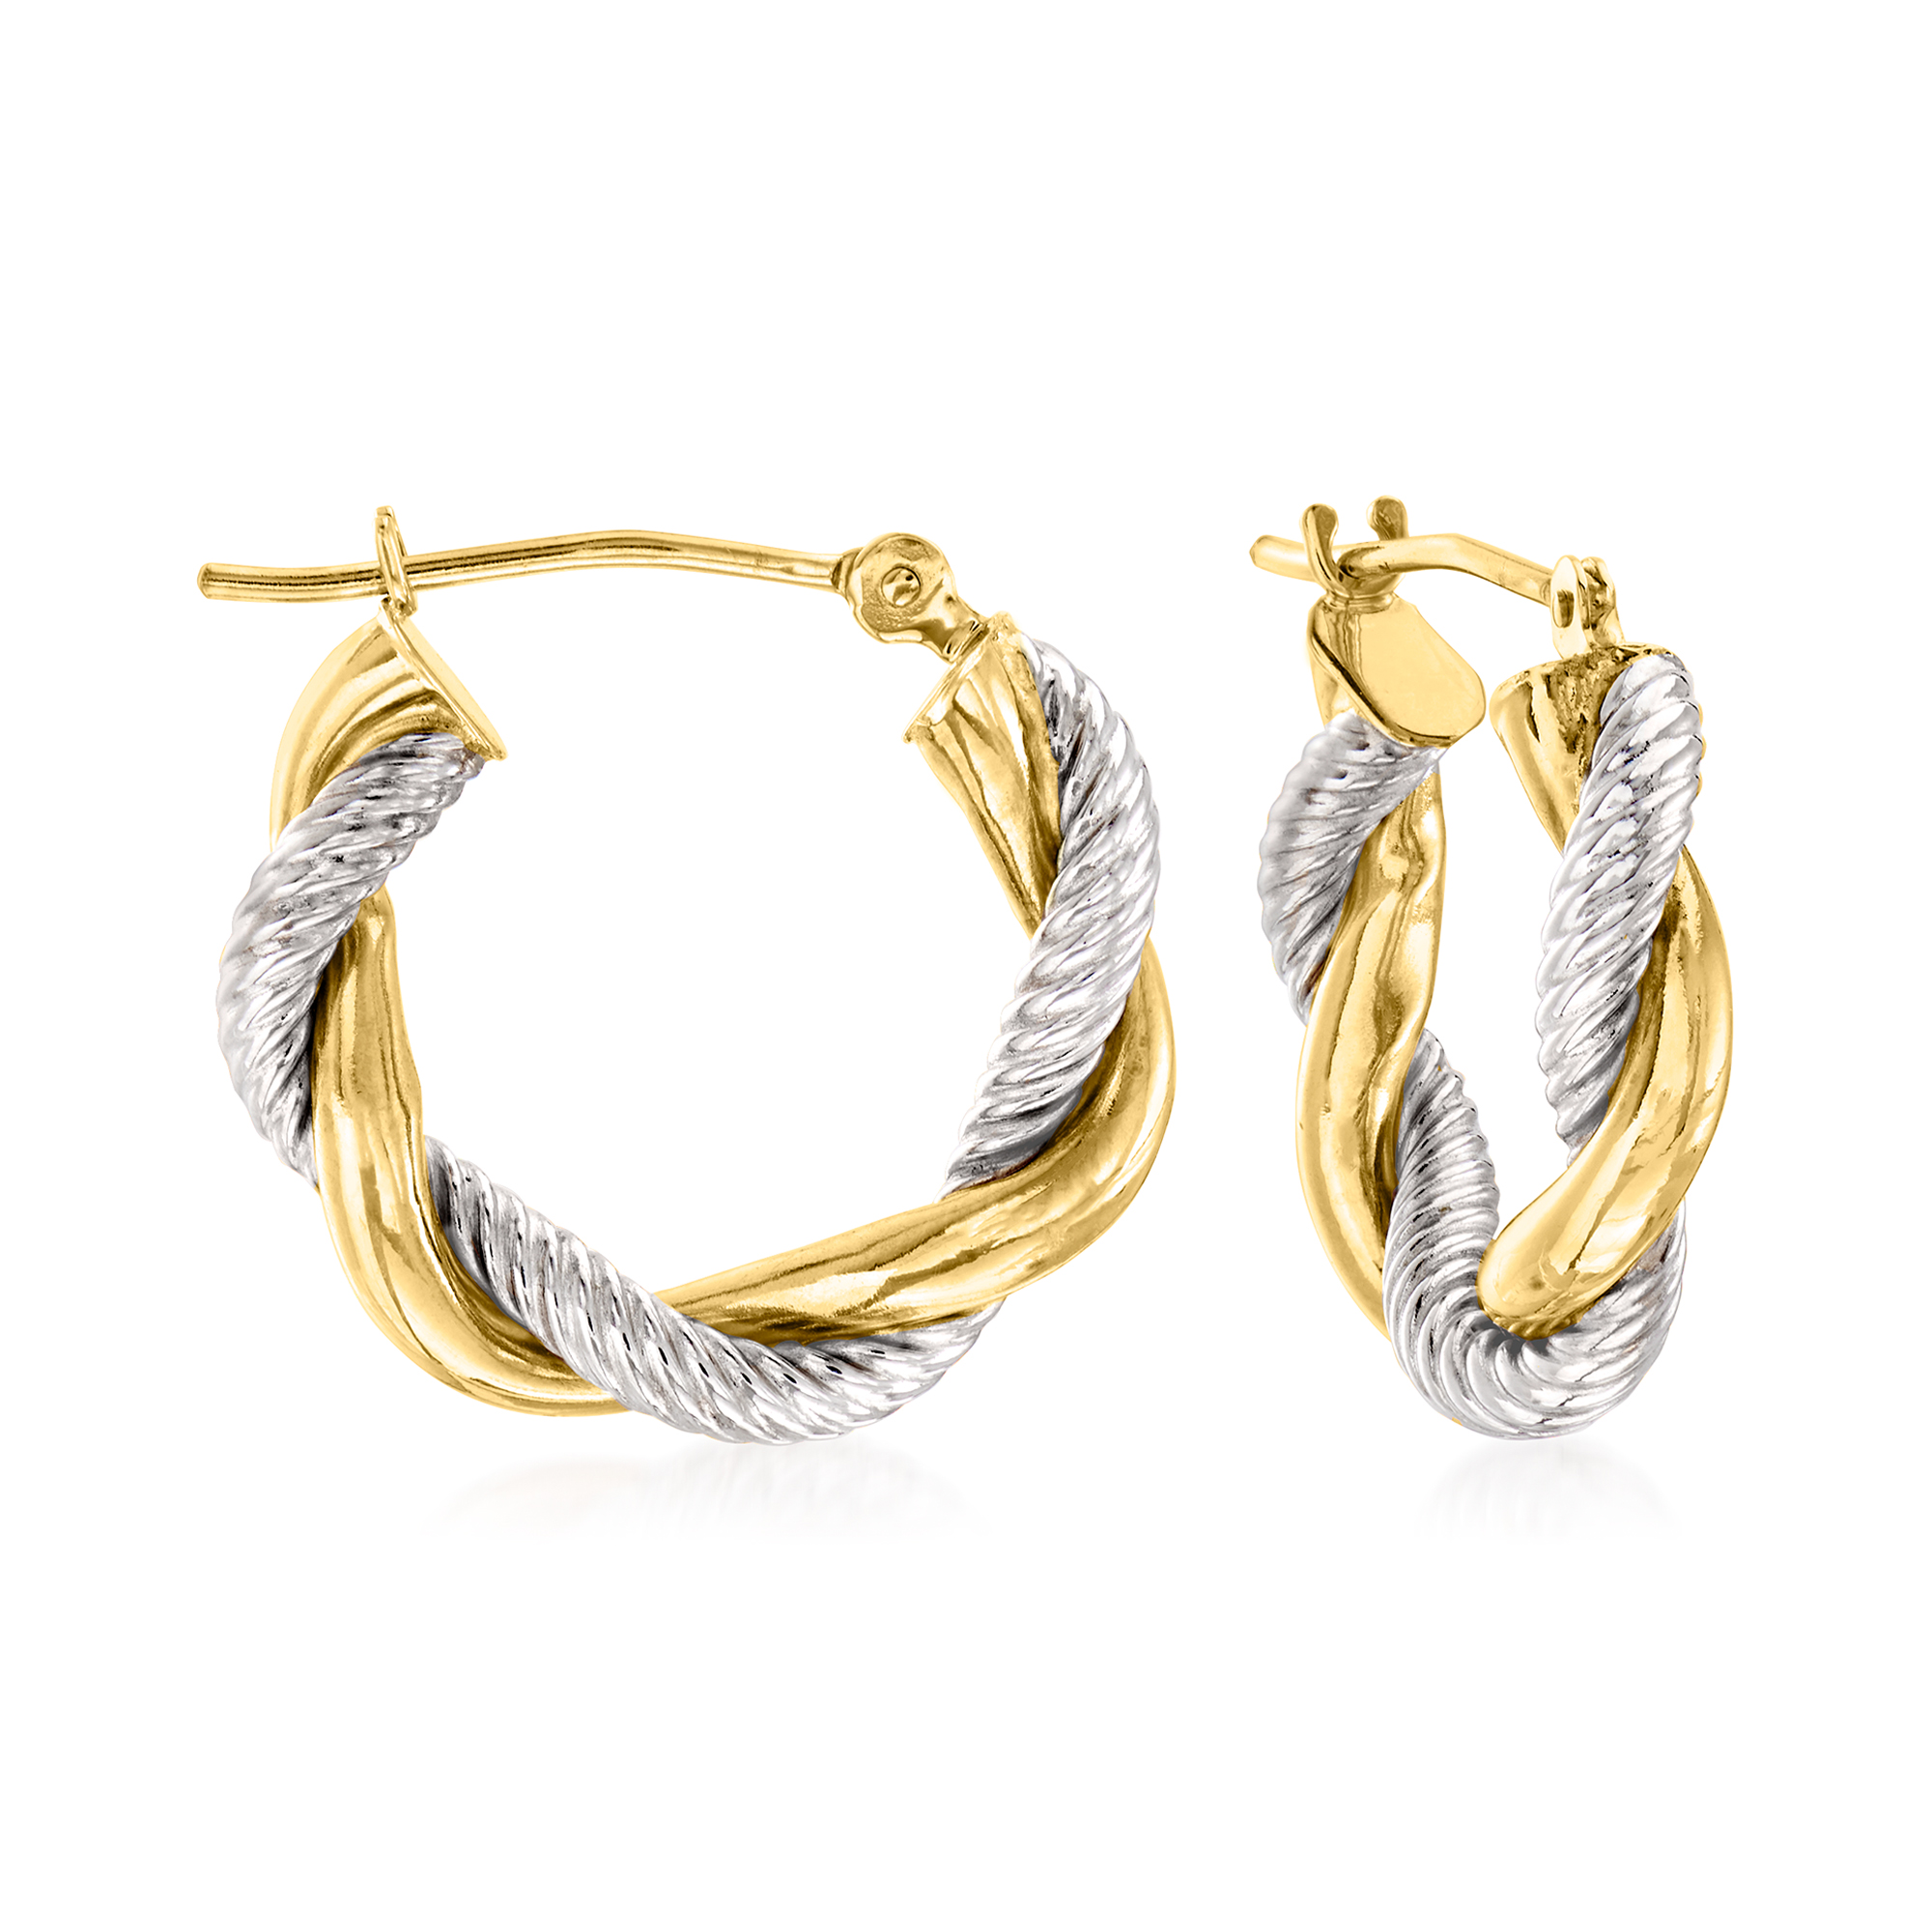 14kt Two-Tone Gold Twisted Hoop Earrings. 5/8